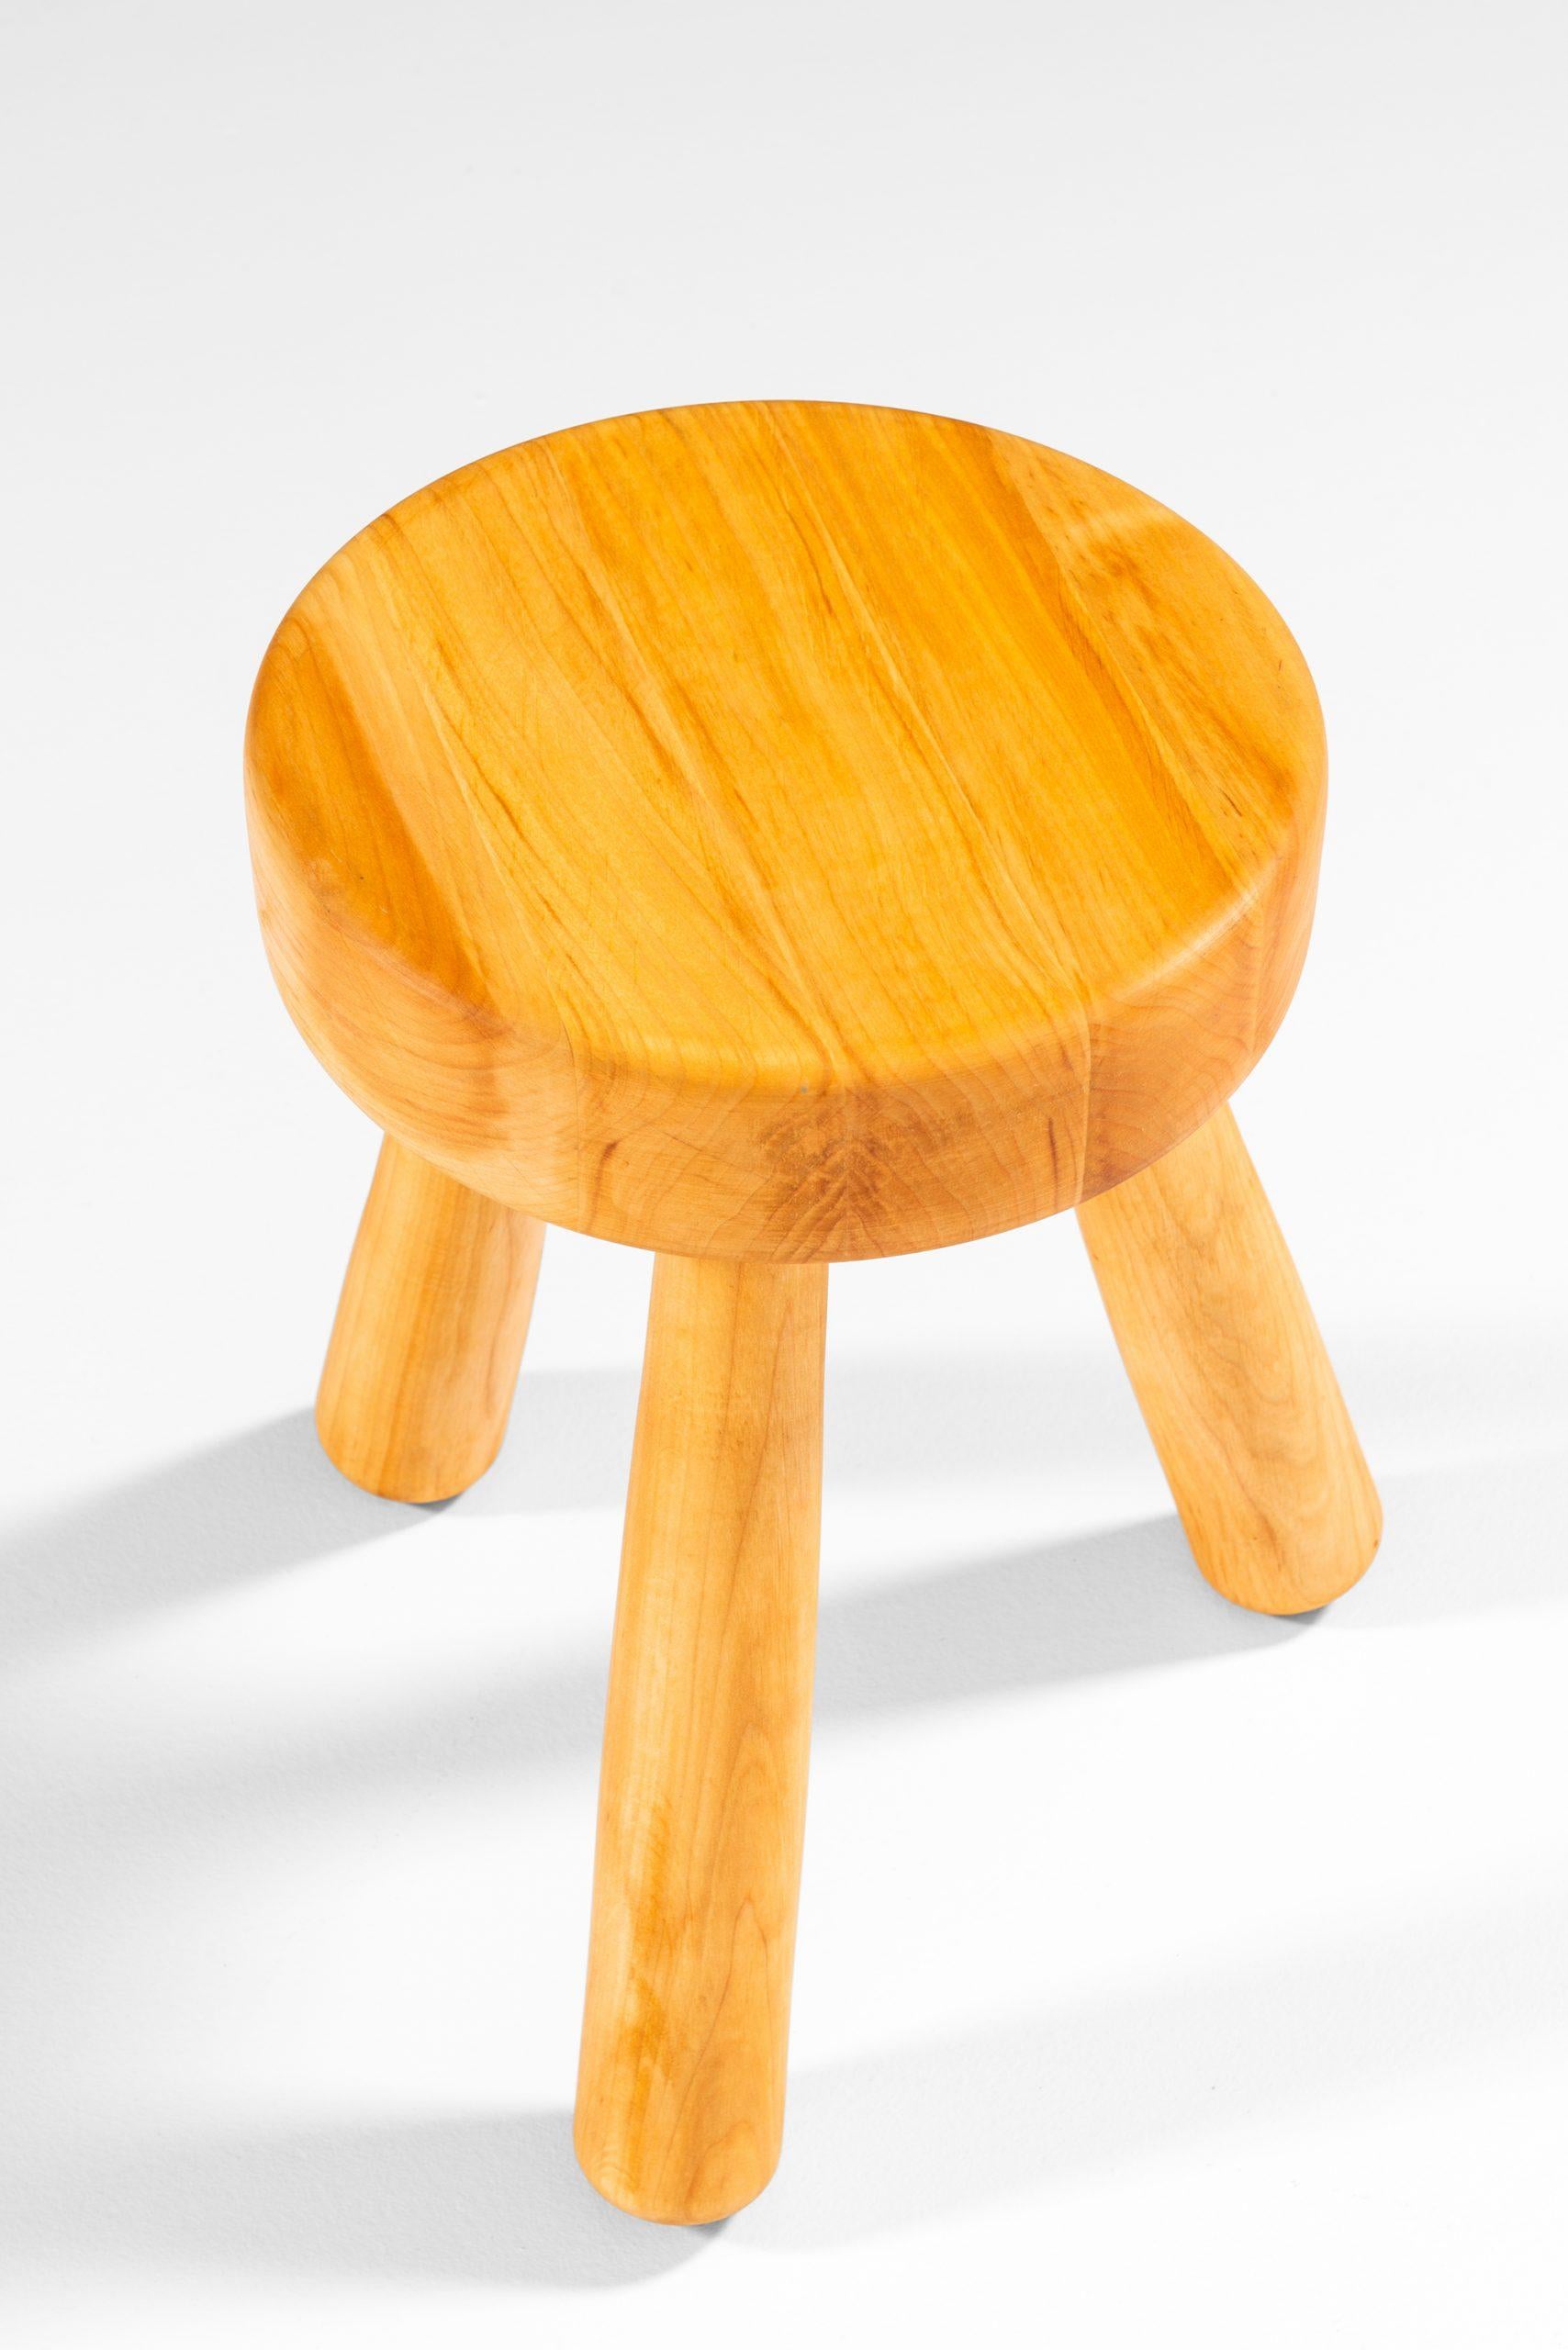 Rare stool designed by Ingvar Hildingsson. Produced by Ingvar Hildingsson in Sweden.